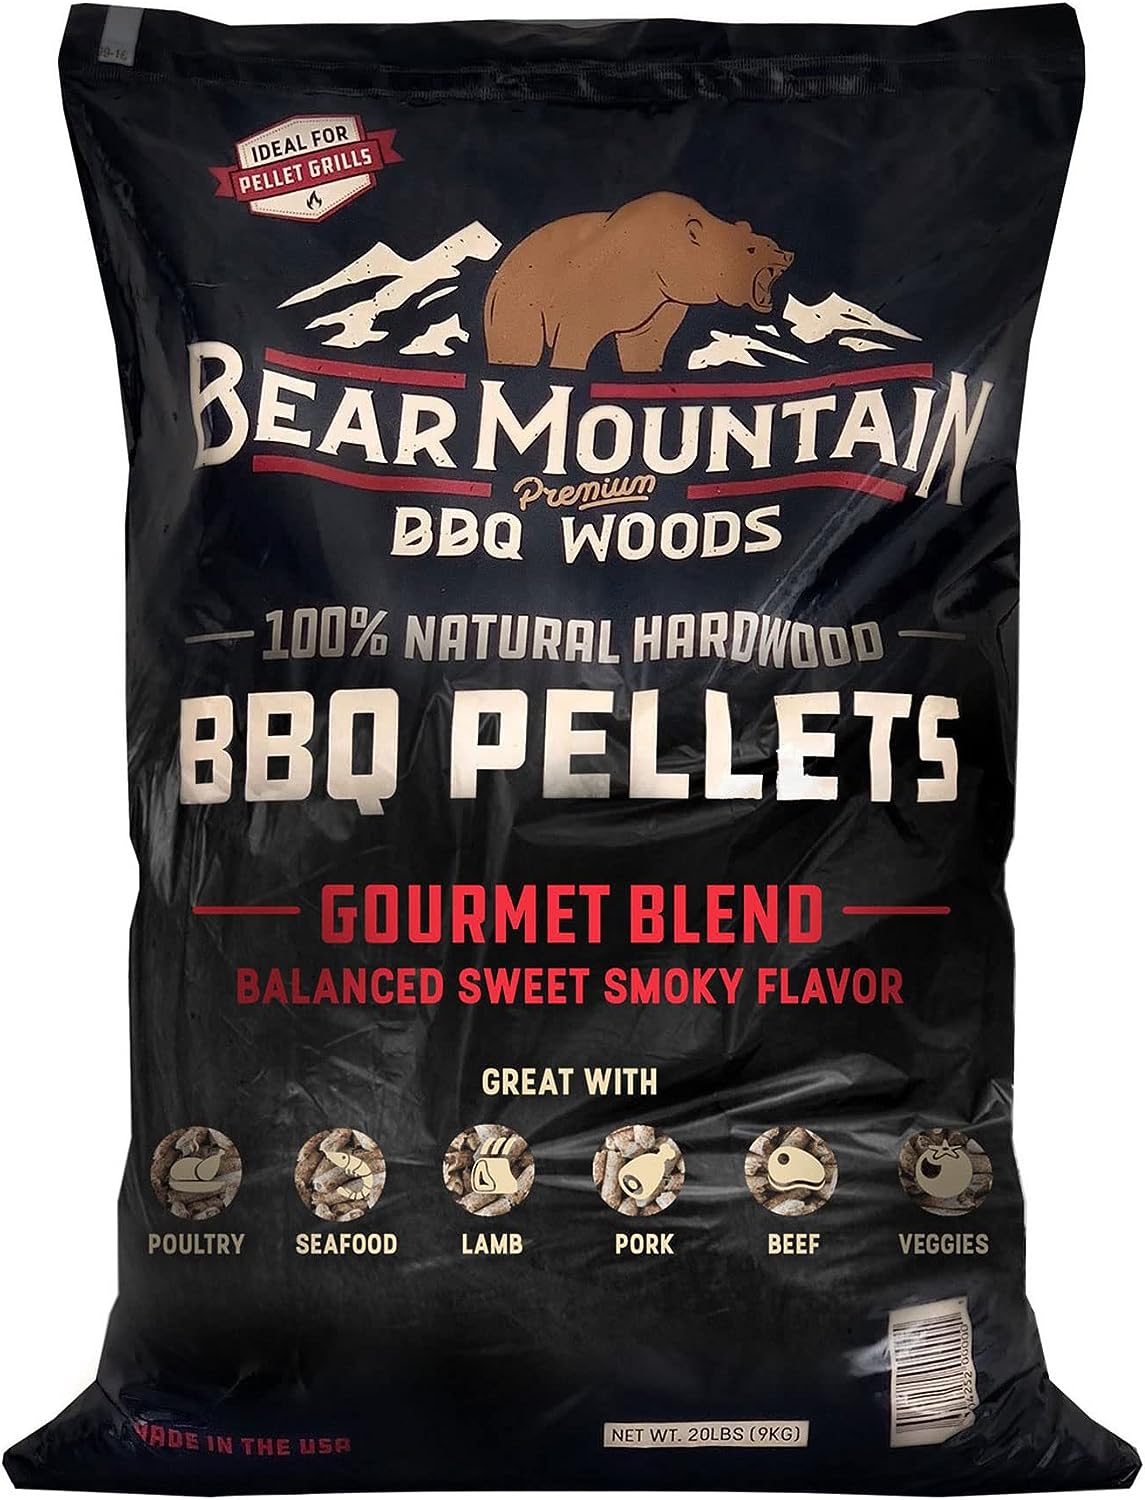 BEAR MOUNTAIN Premium BBQ WOODS 100% All-Natural [...]